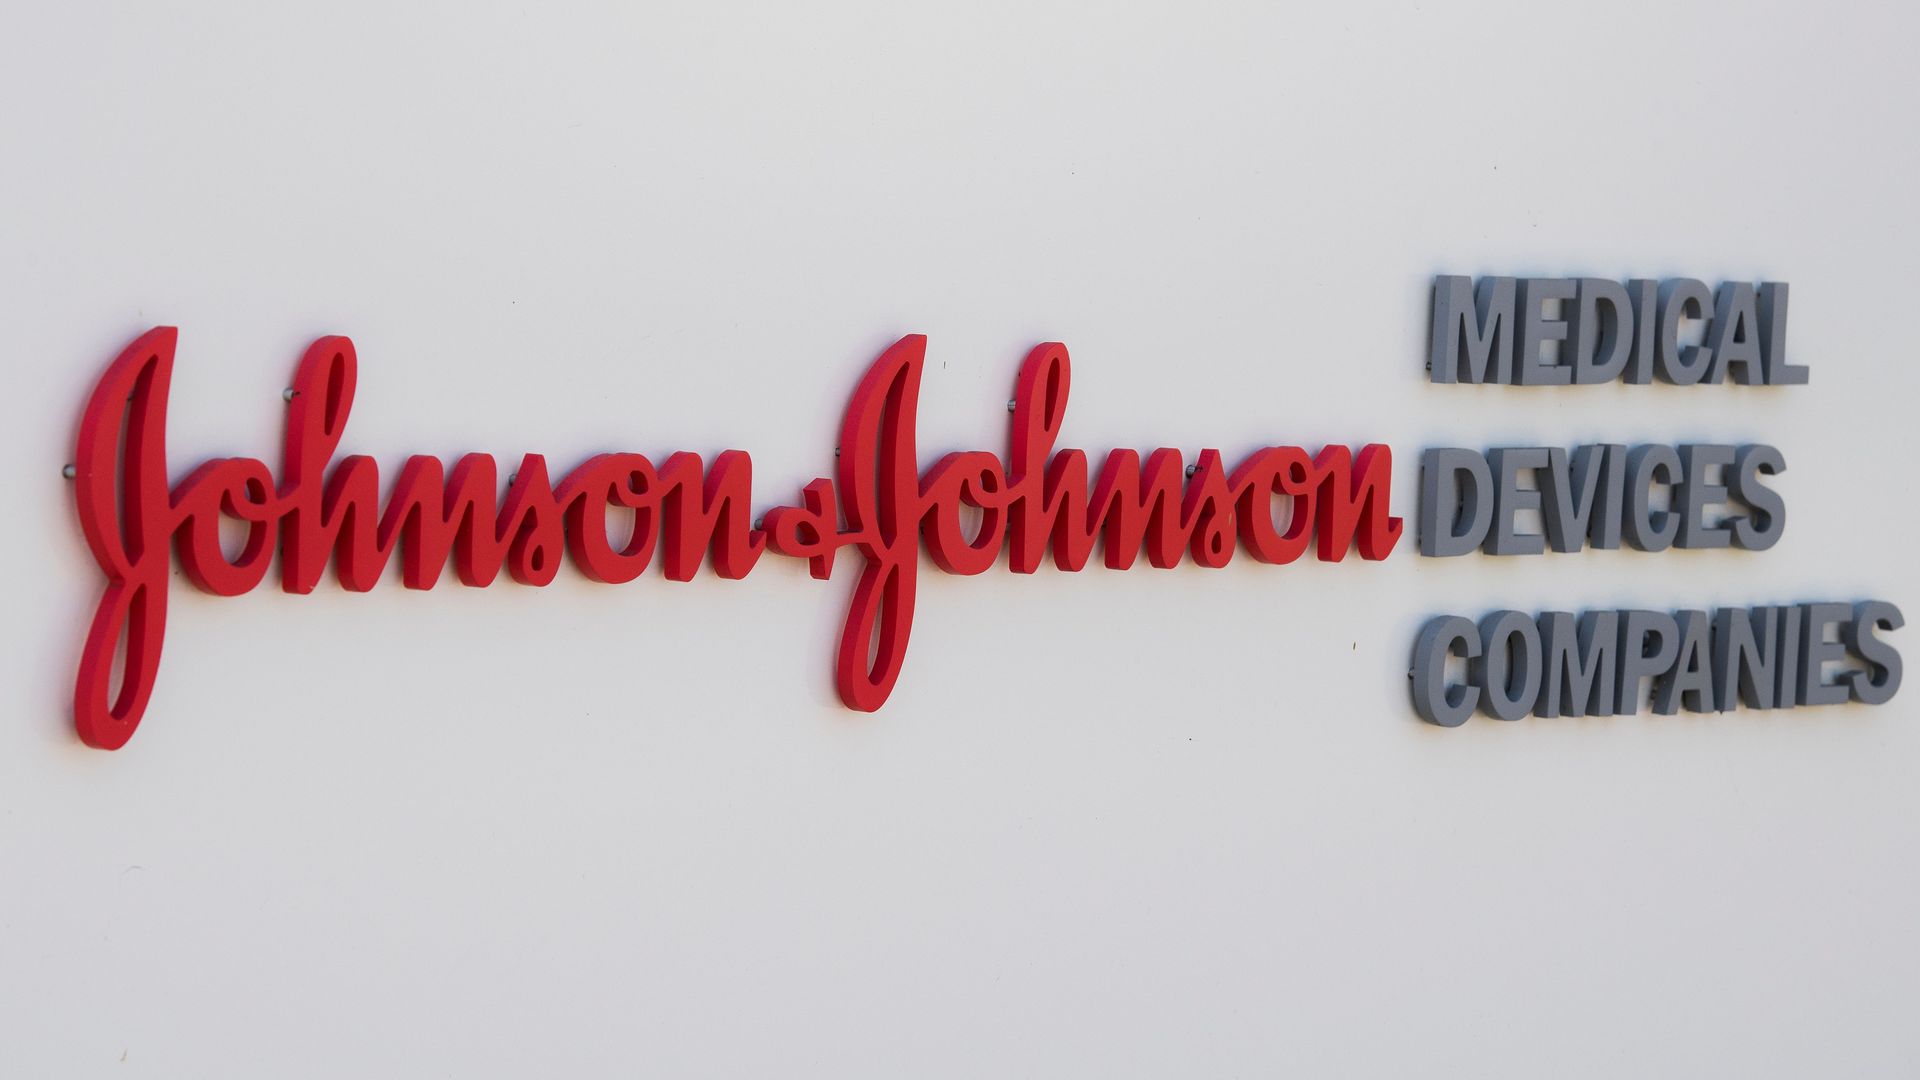 Johnson and Johnson logo on a building